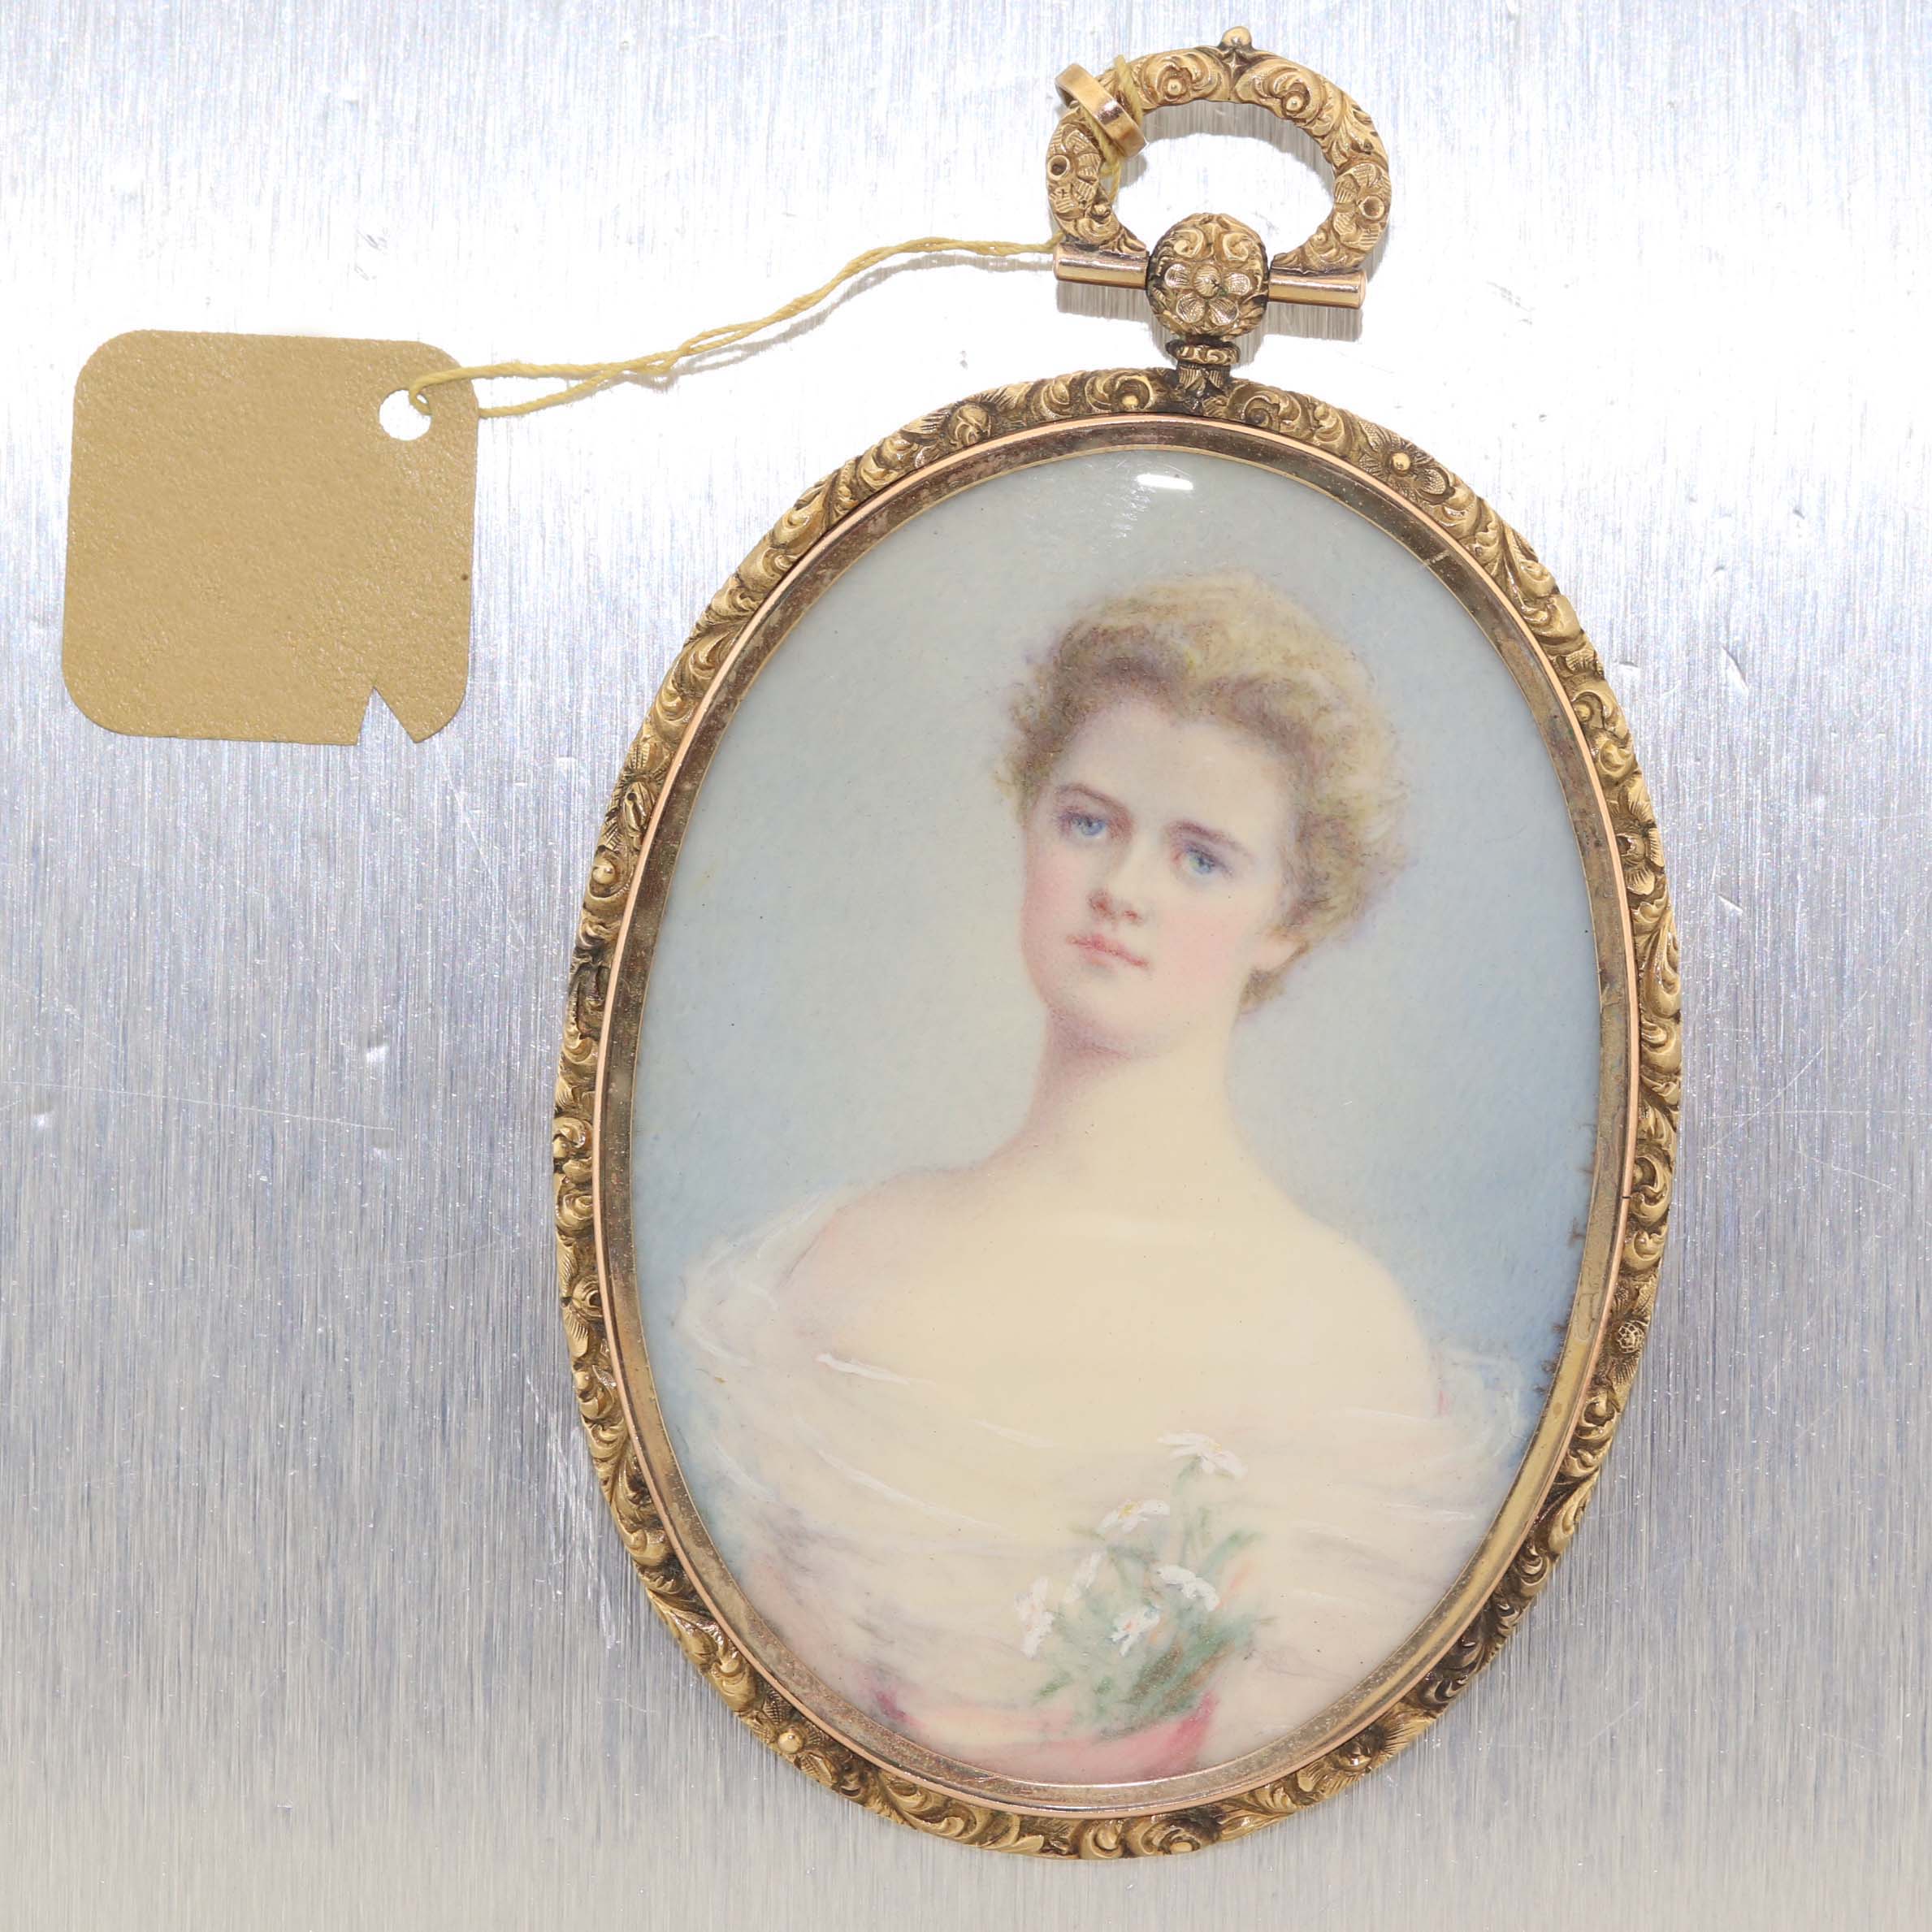 A. Brandt + Son Victorian Padlock Pendant Necklace